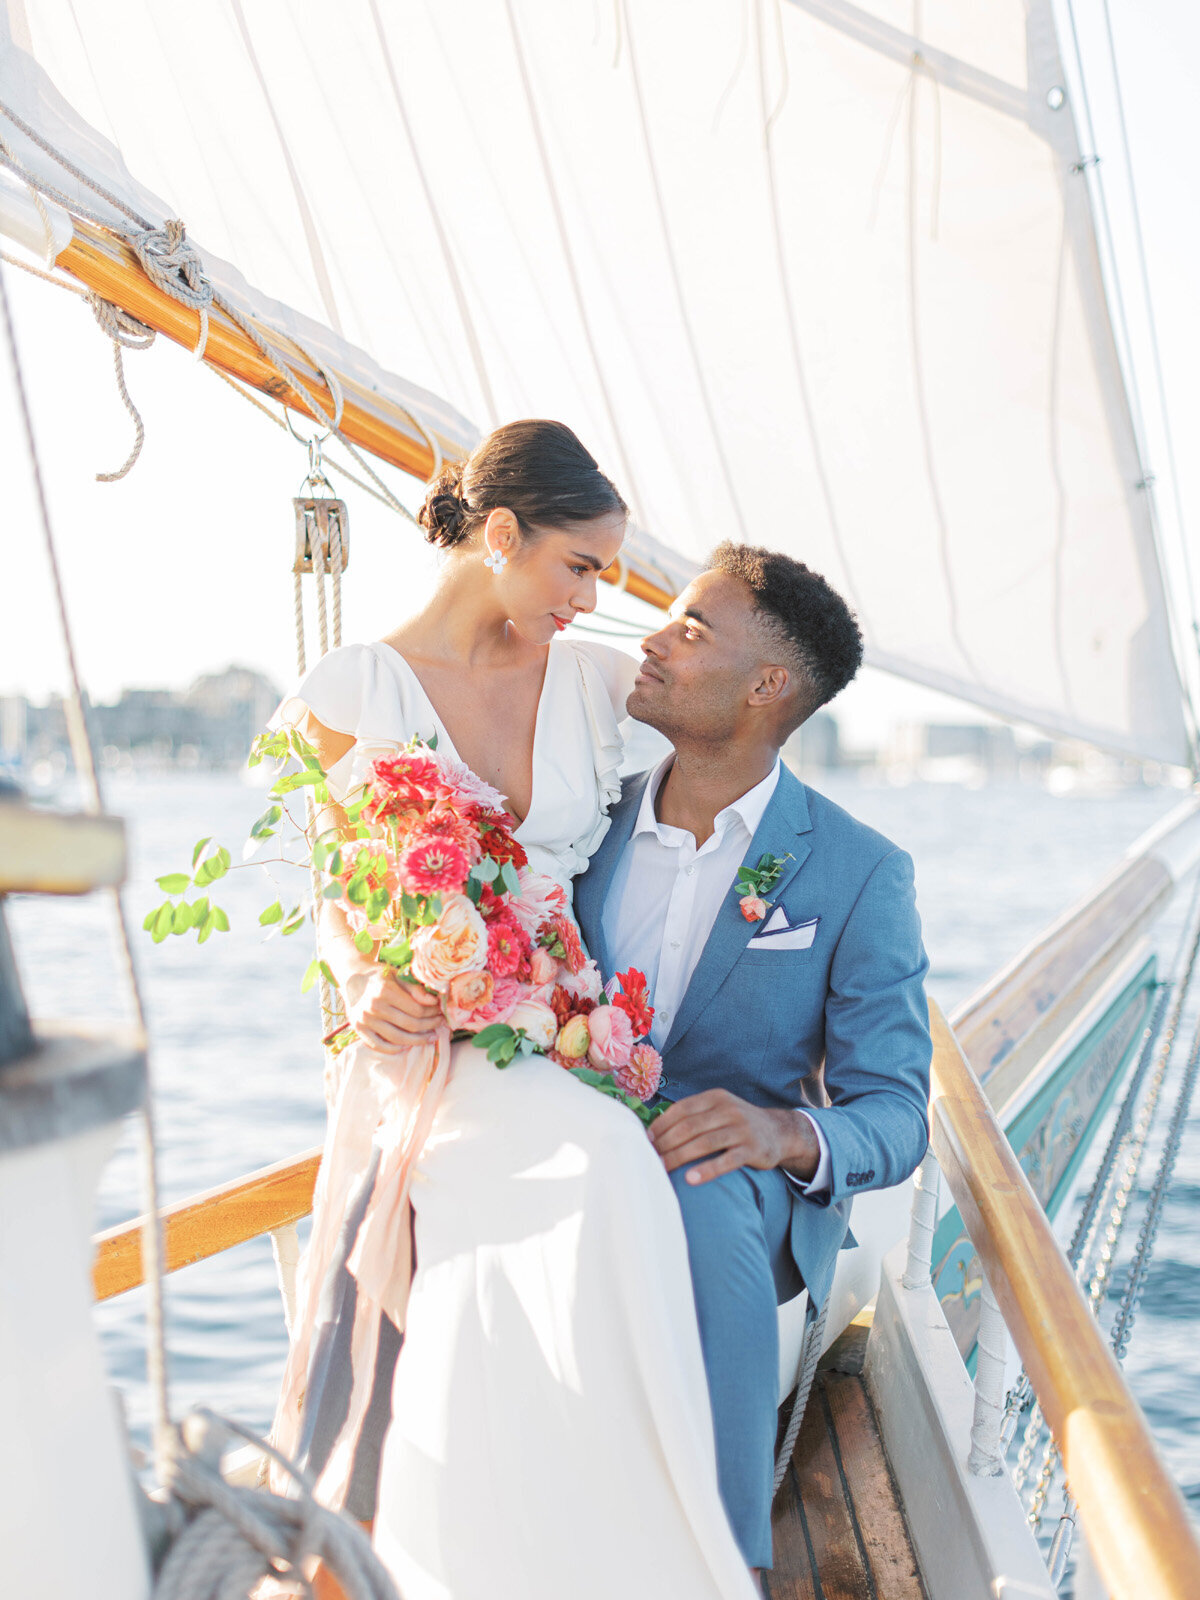 Kate-Murtaugh-Events-elopement-wedding-planner-Boston-Harbor-sailing-sail-boat-yacht-greenery-water-skyline-couple